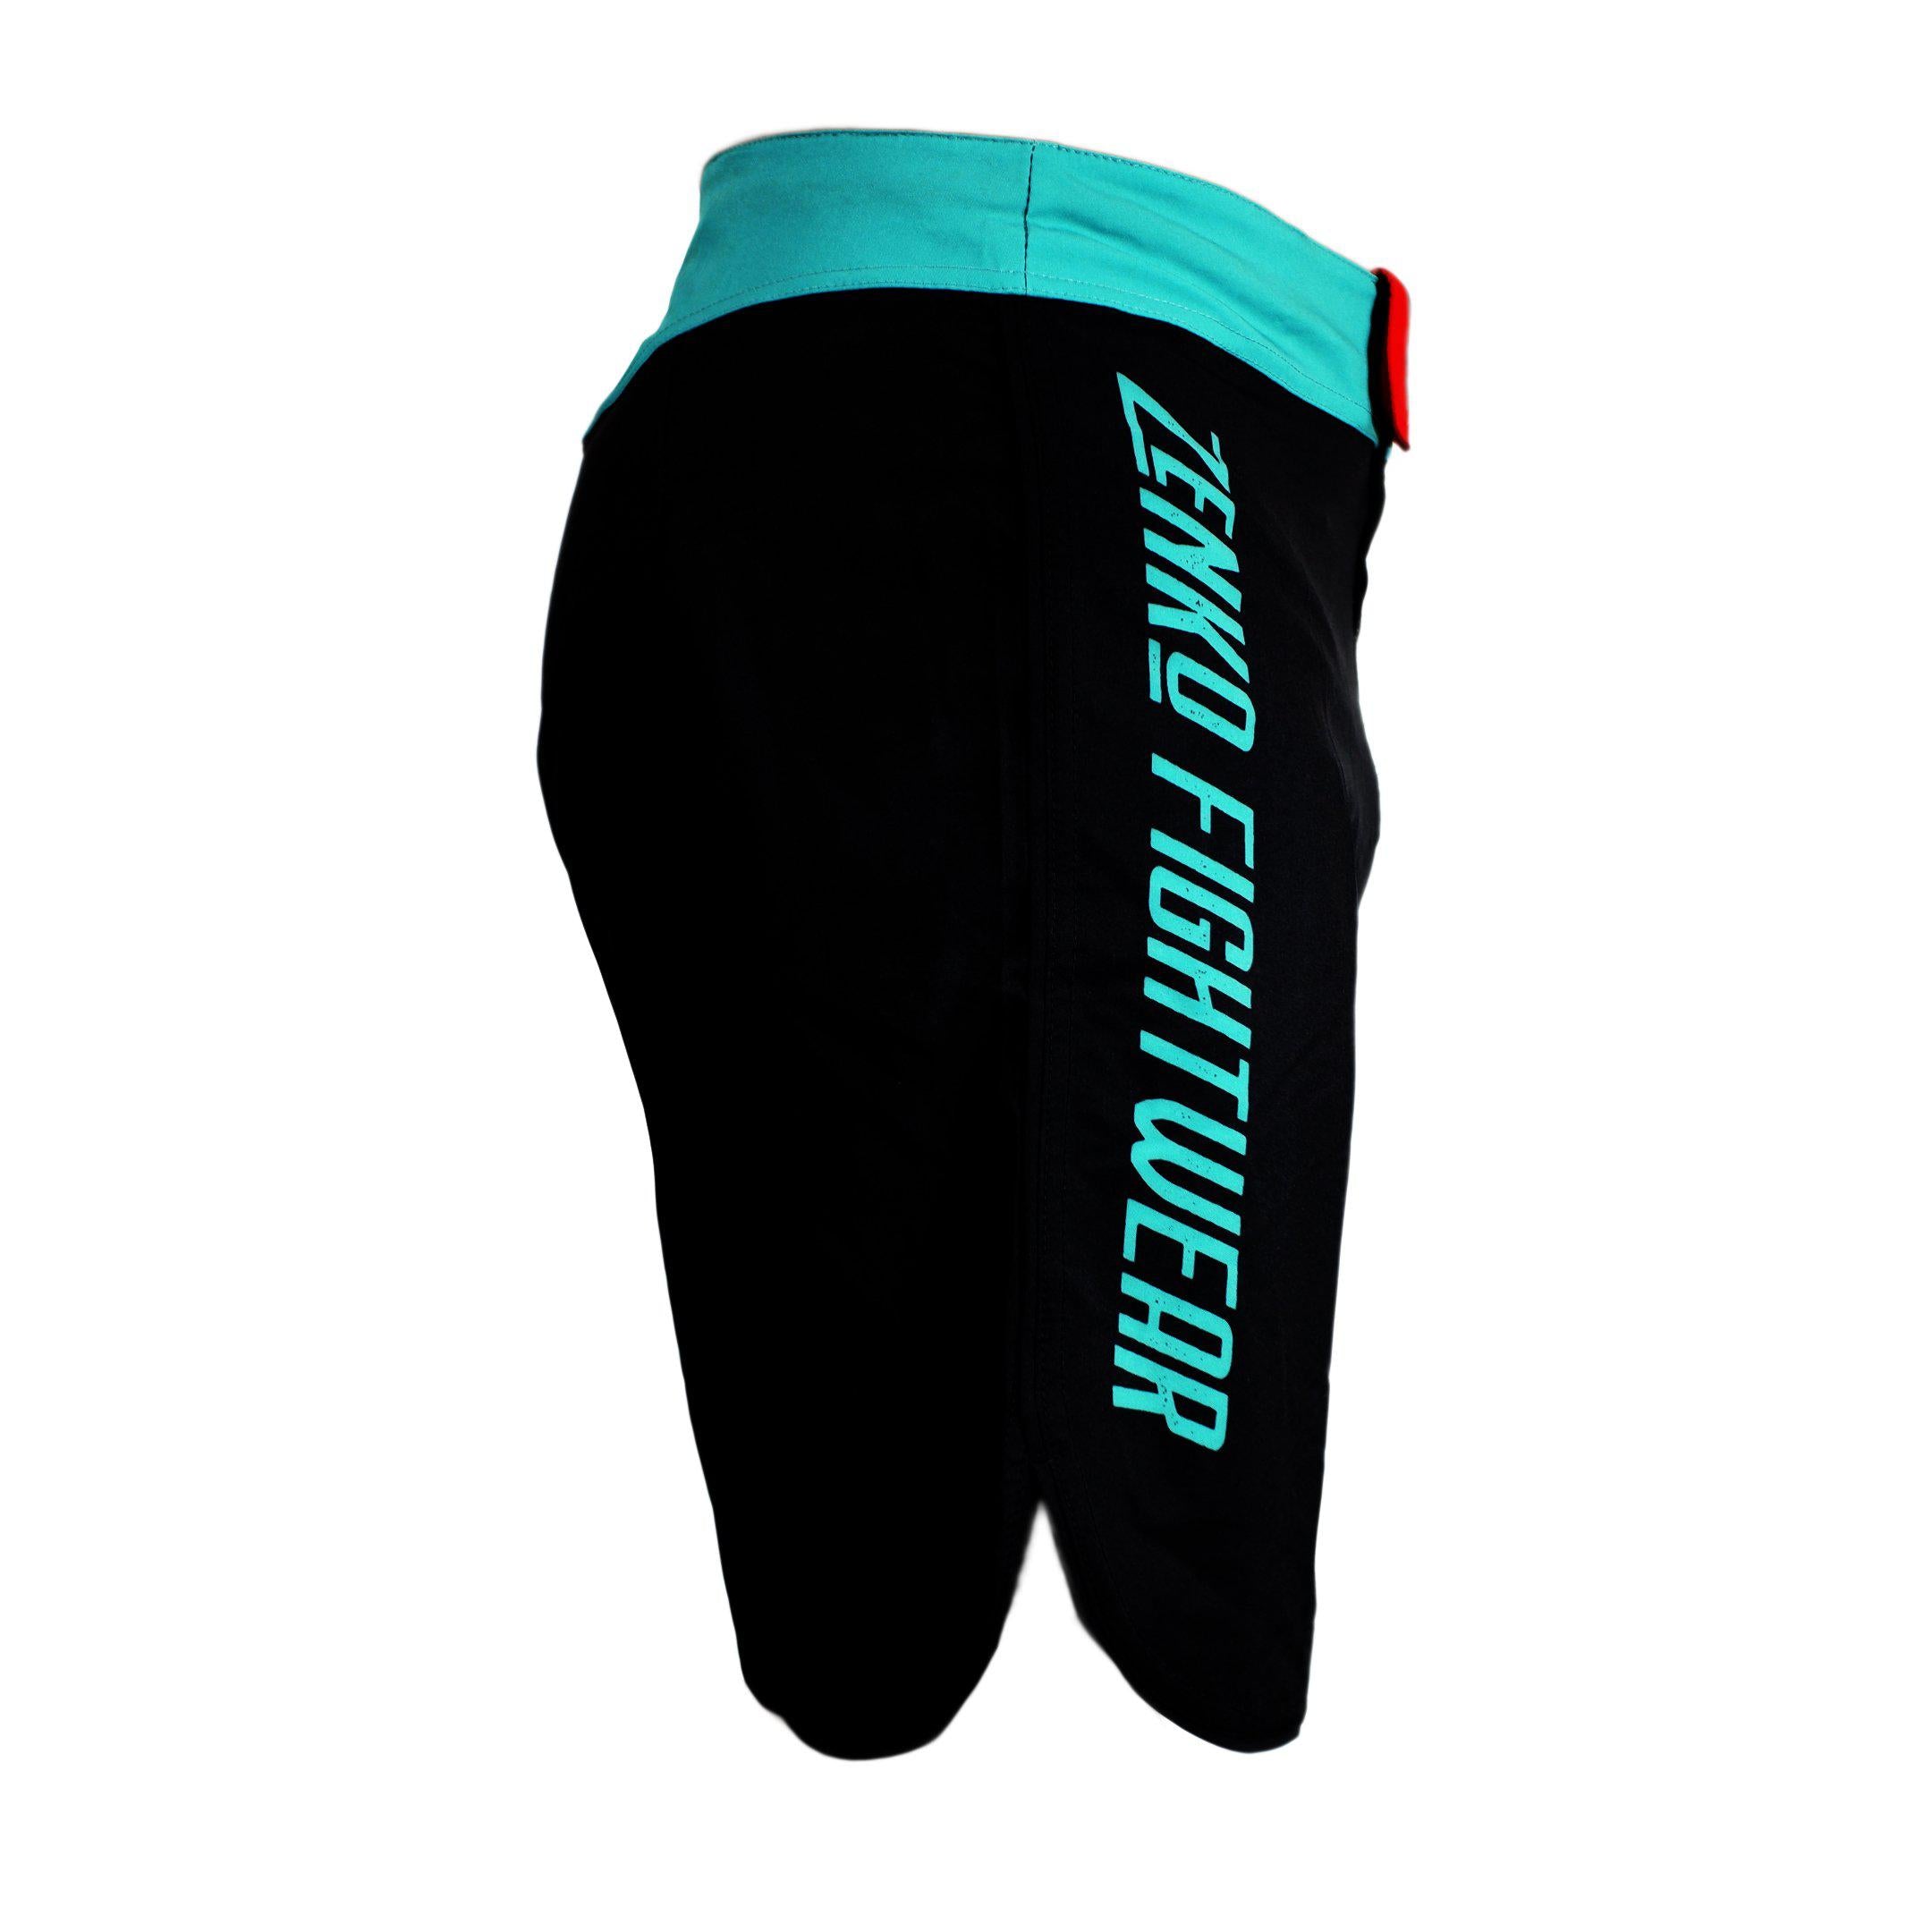 Komainu Grappling Shorts - Zenko Fightwear